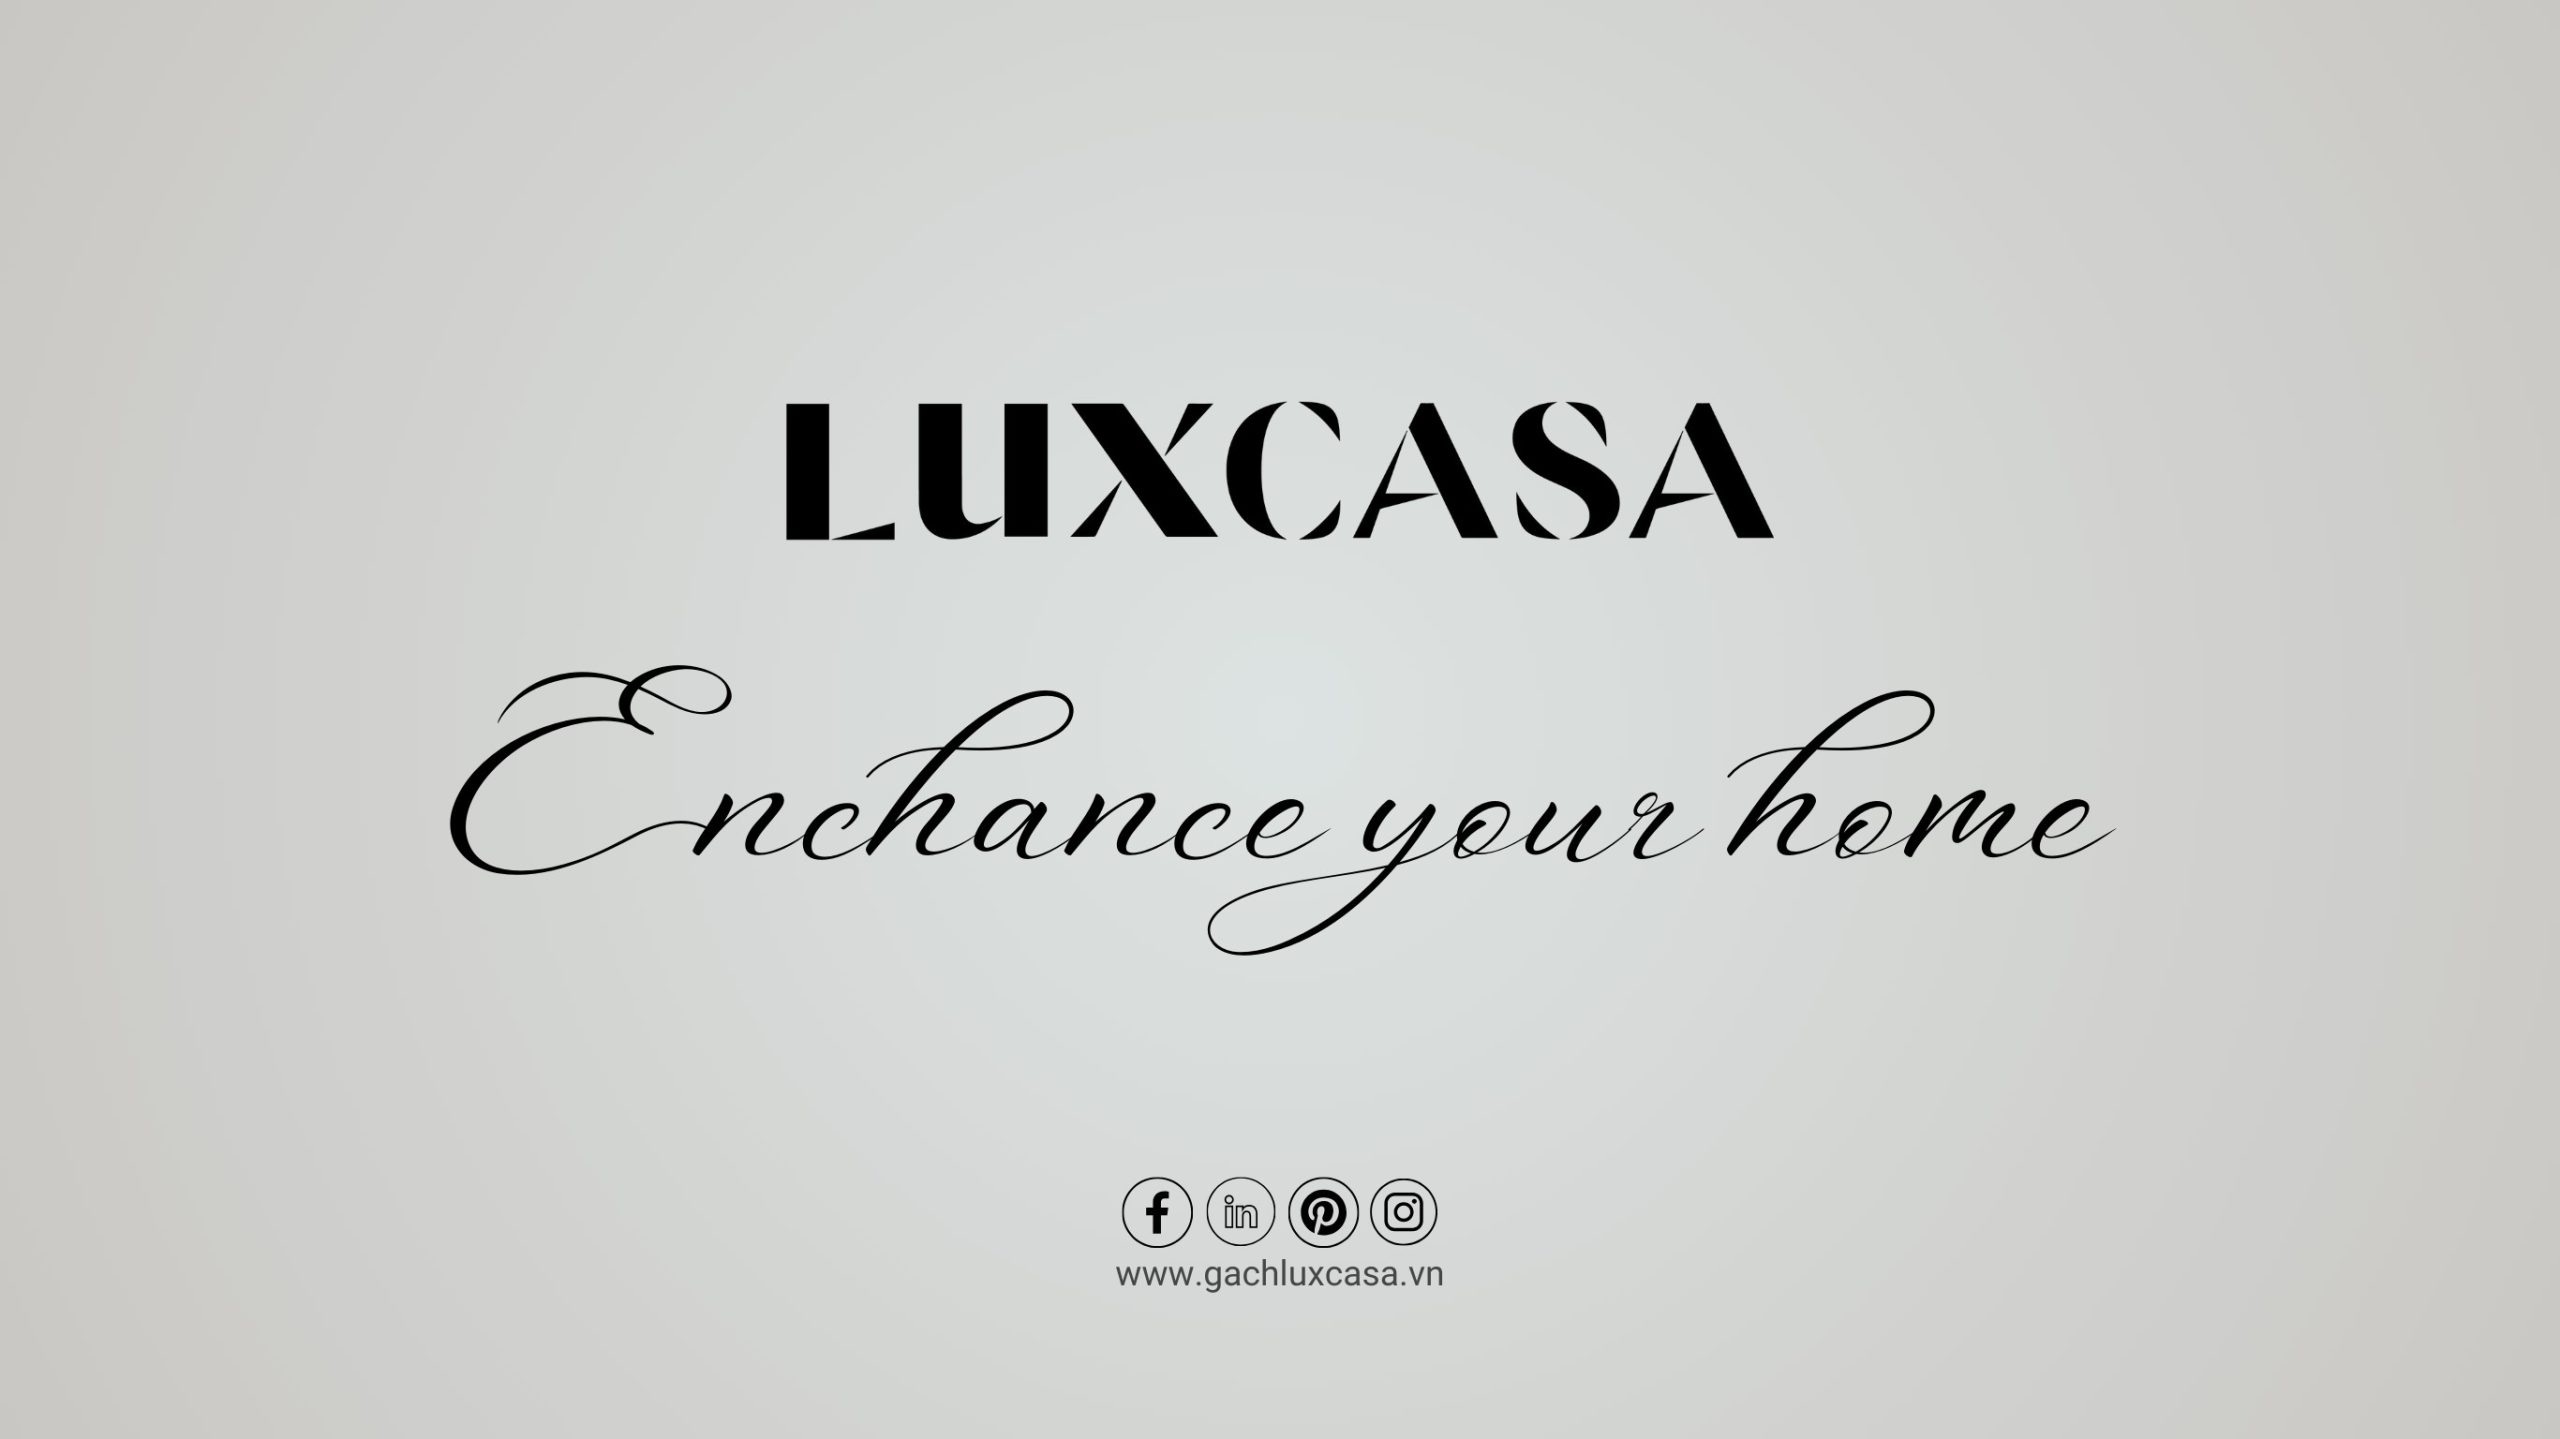 Luxcasa thanks you